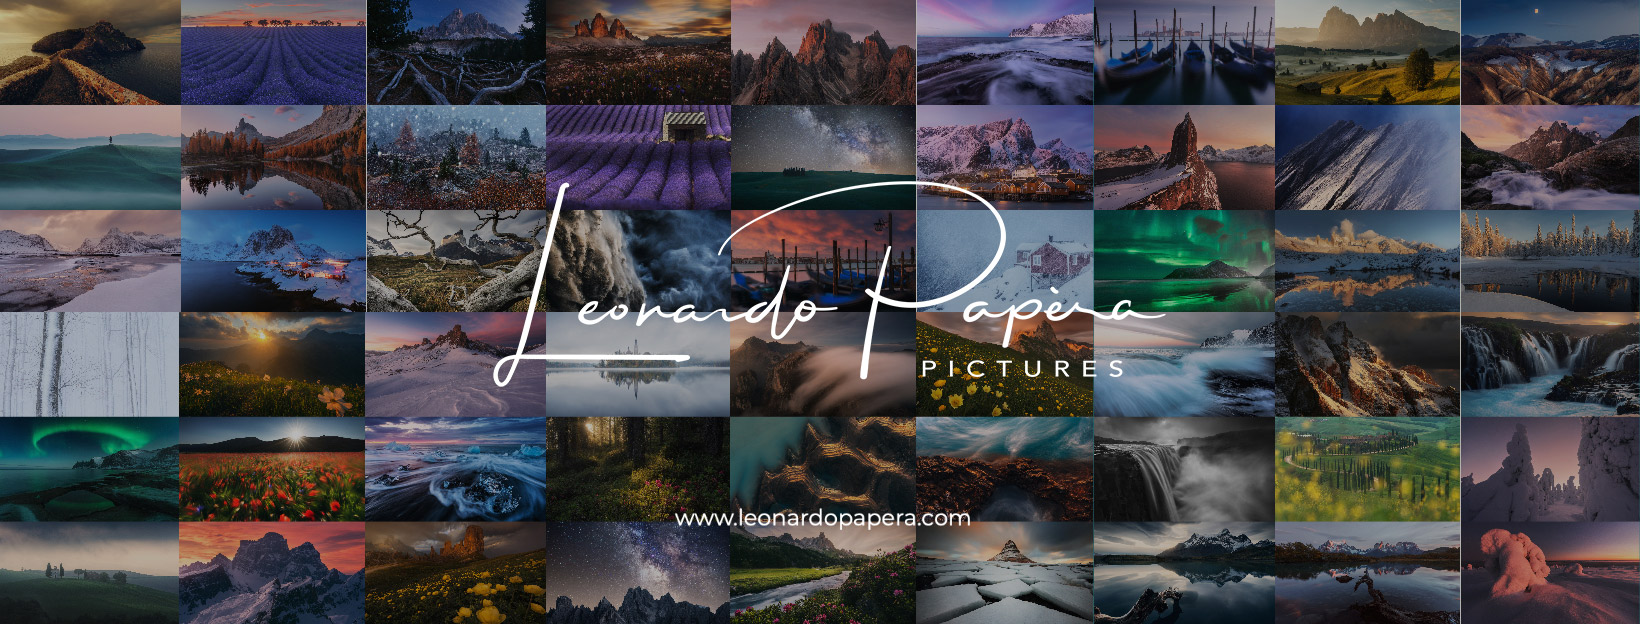 LeonardoPaperaPhotography banner